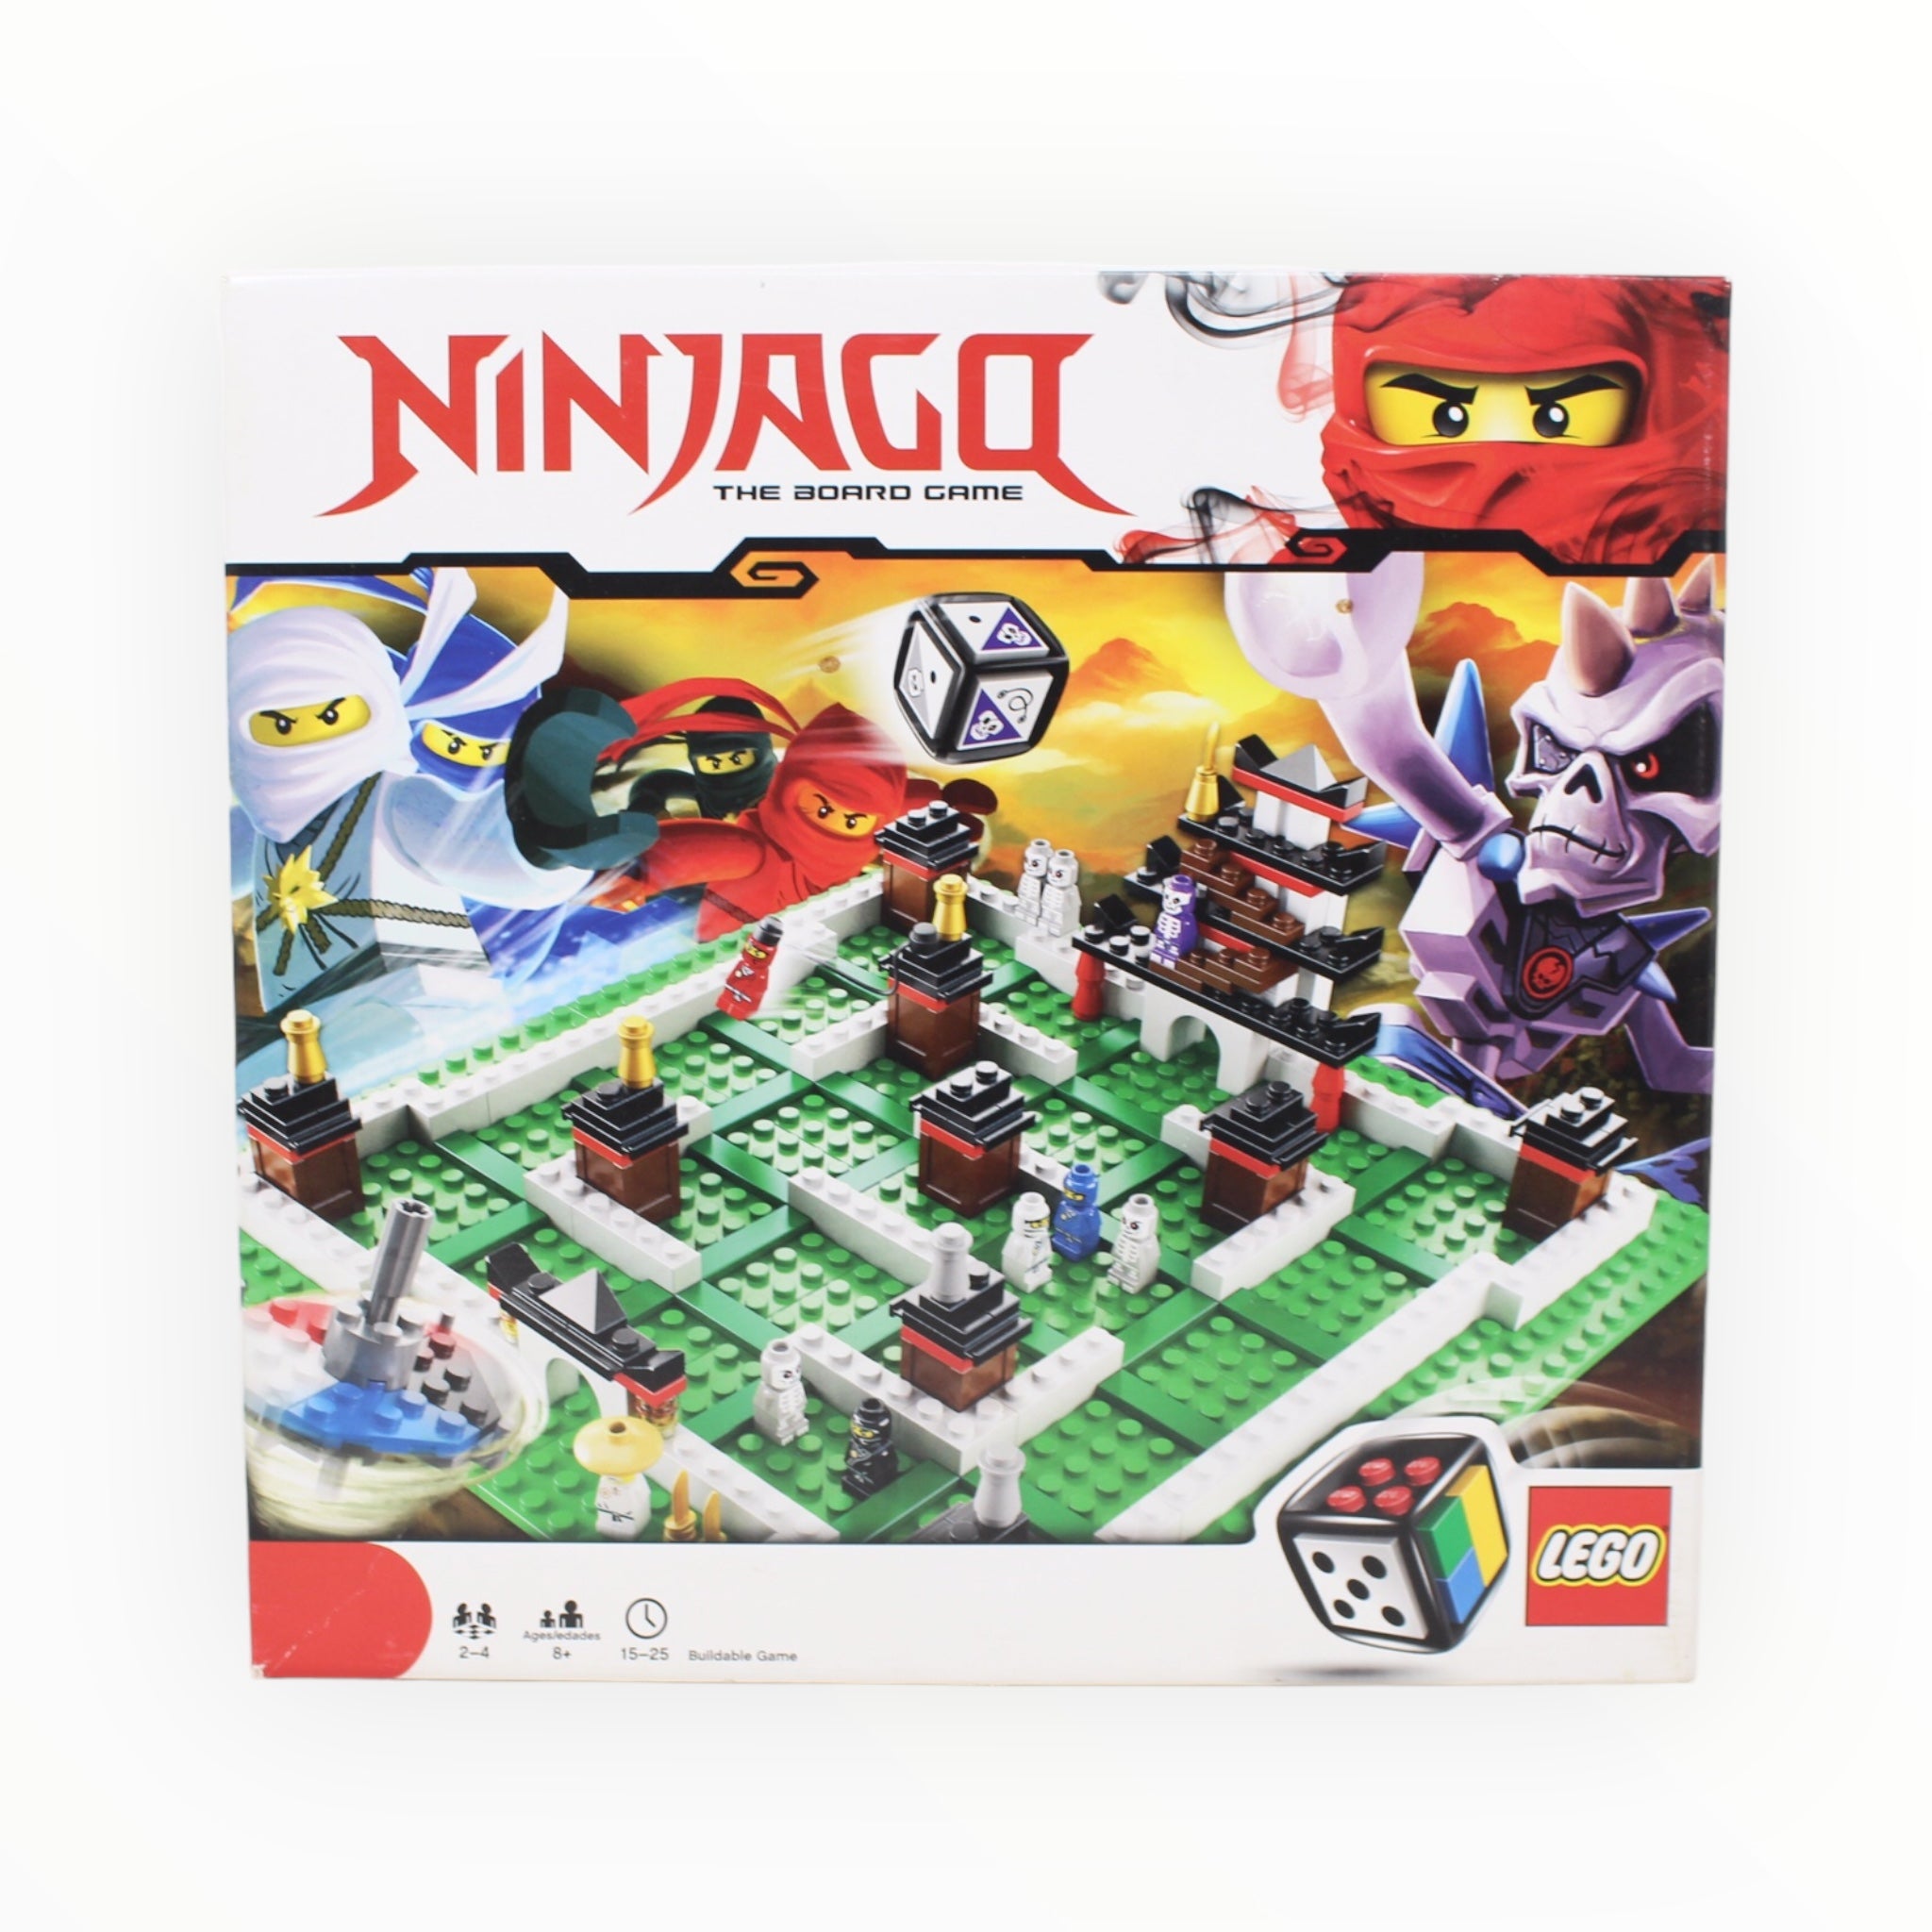 Certified Used Set 3856 Ninjago - The Board Game